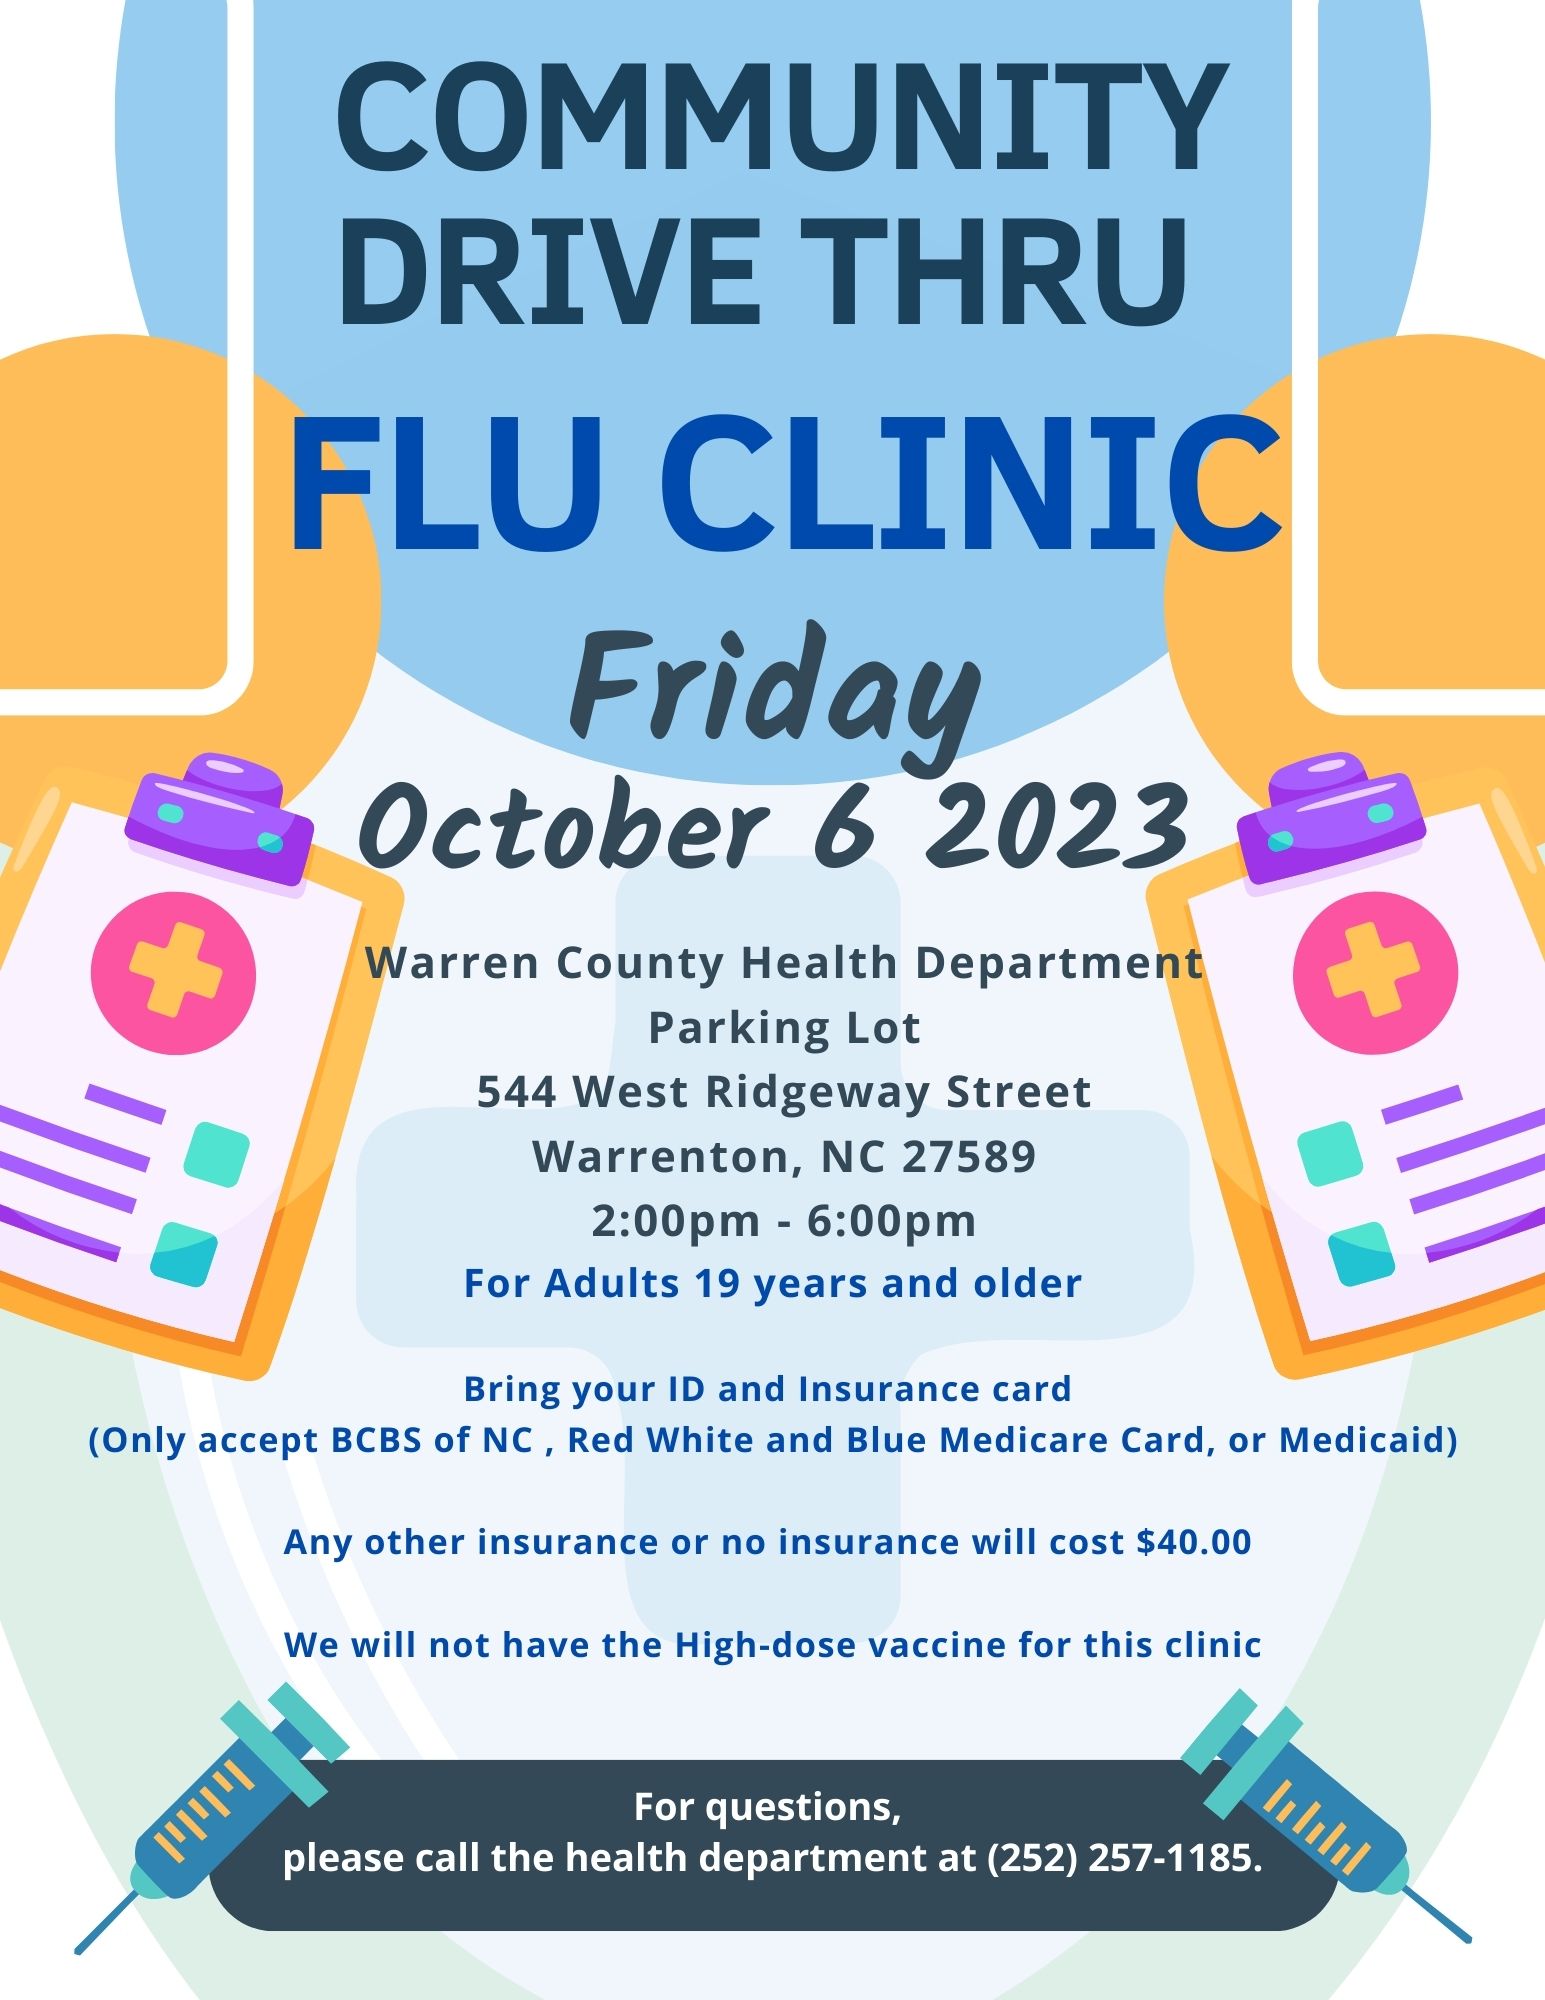 Community Drive Thru flu clinic warrenton nc october 6 2023